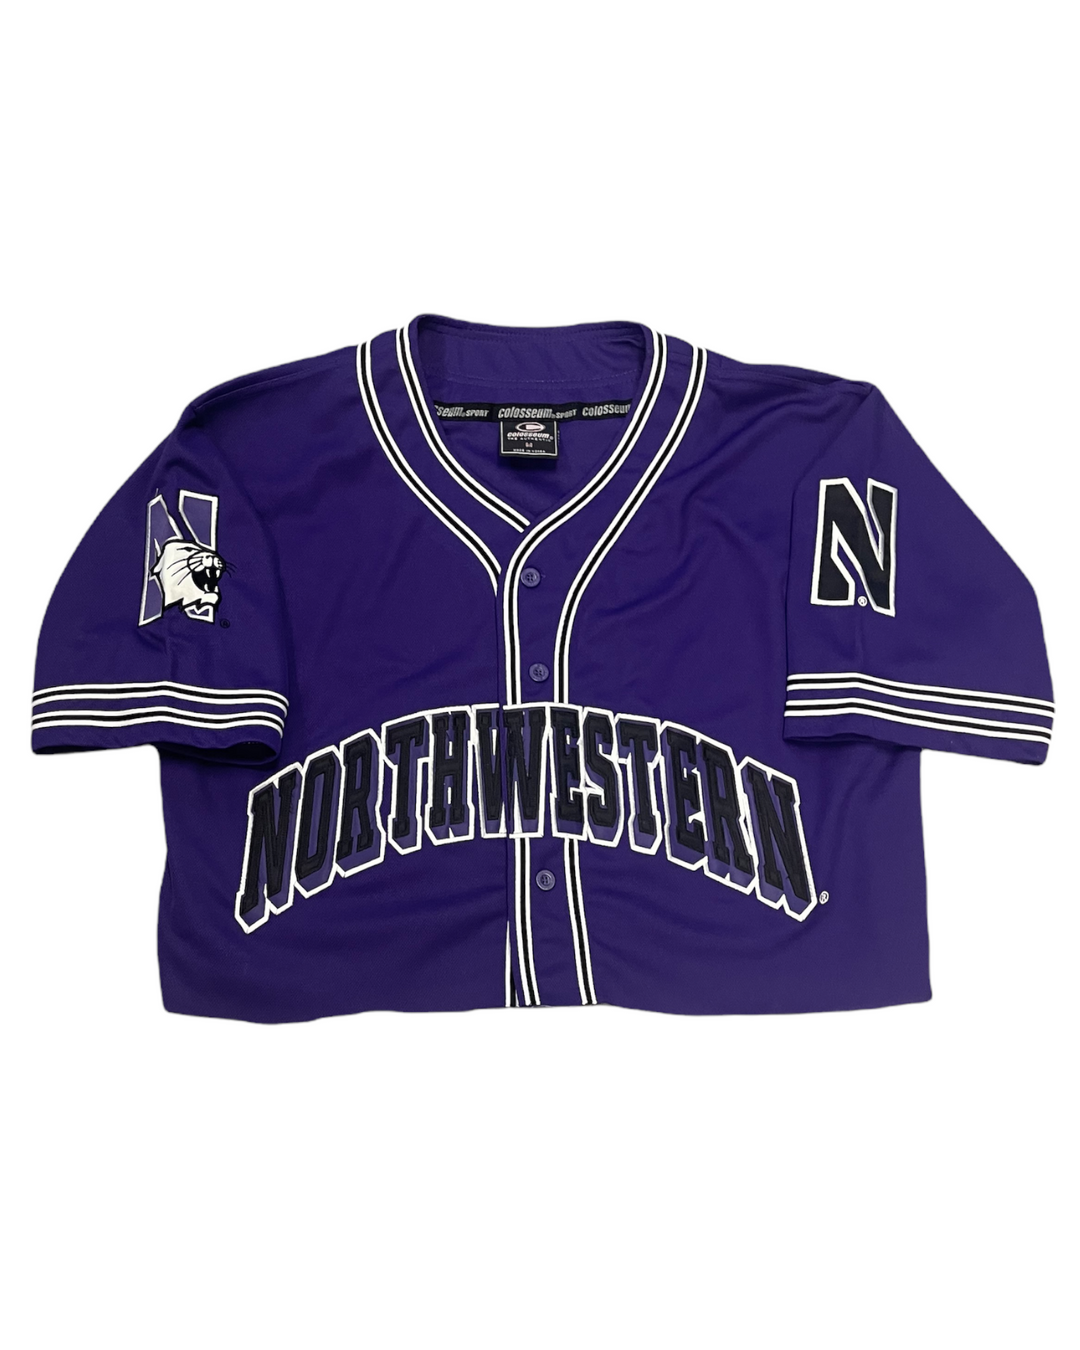 Northwestern Vintage Cropped Jersey